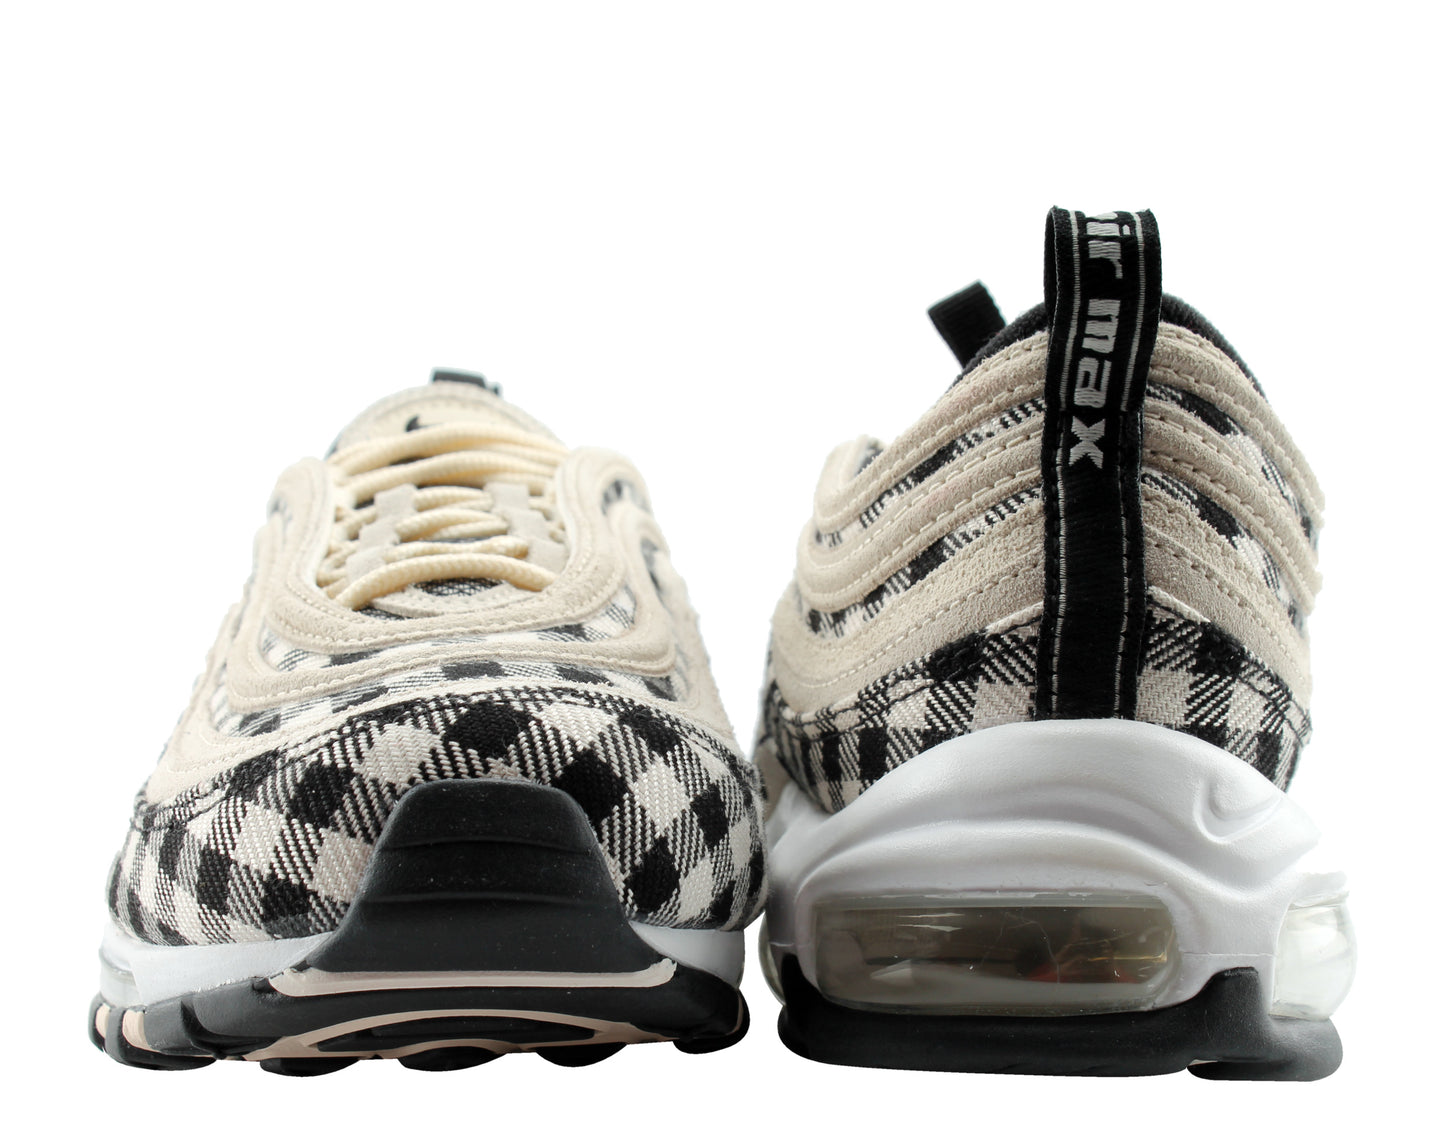 Nike Air Max 97 Premium Light Cream/Black-Sail Men's Running Shoes 312834-201